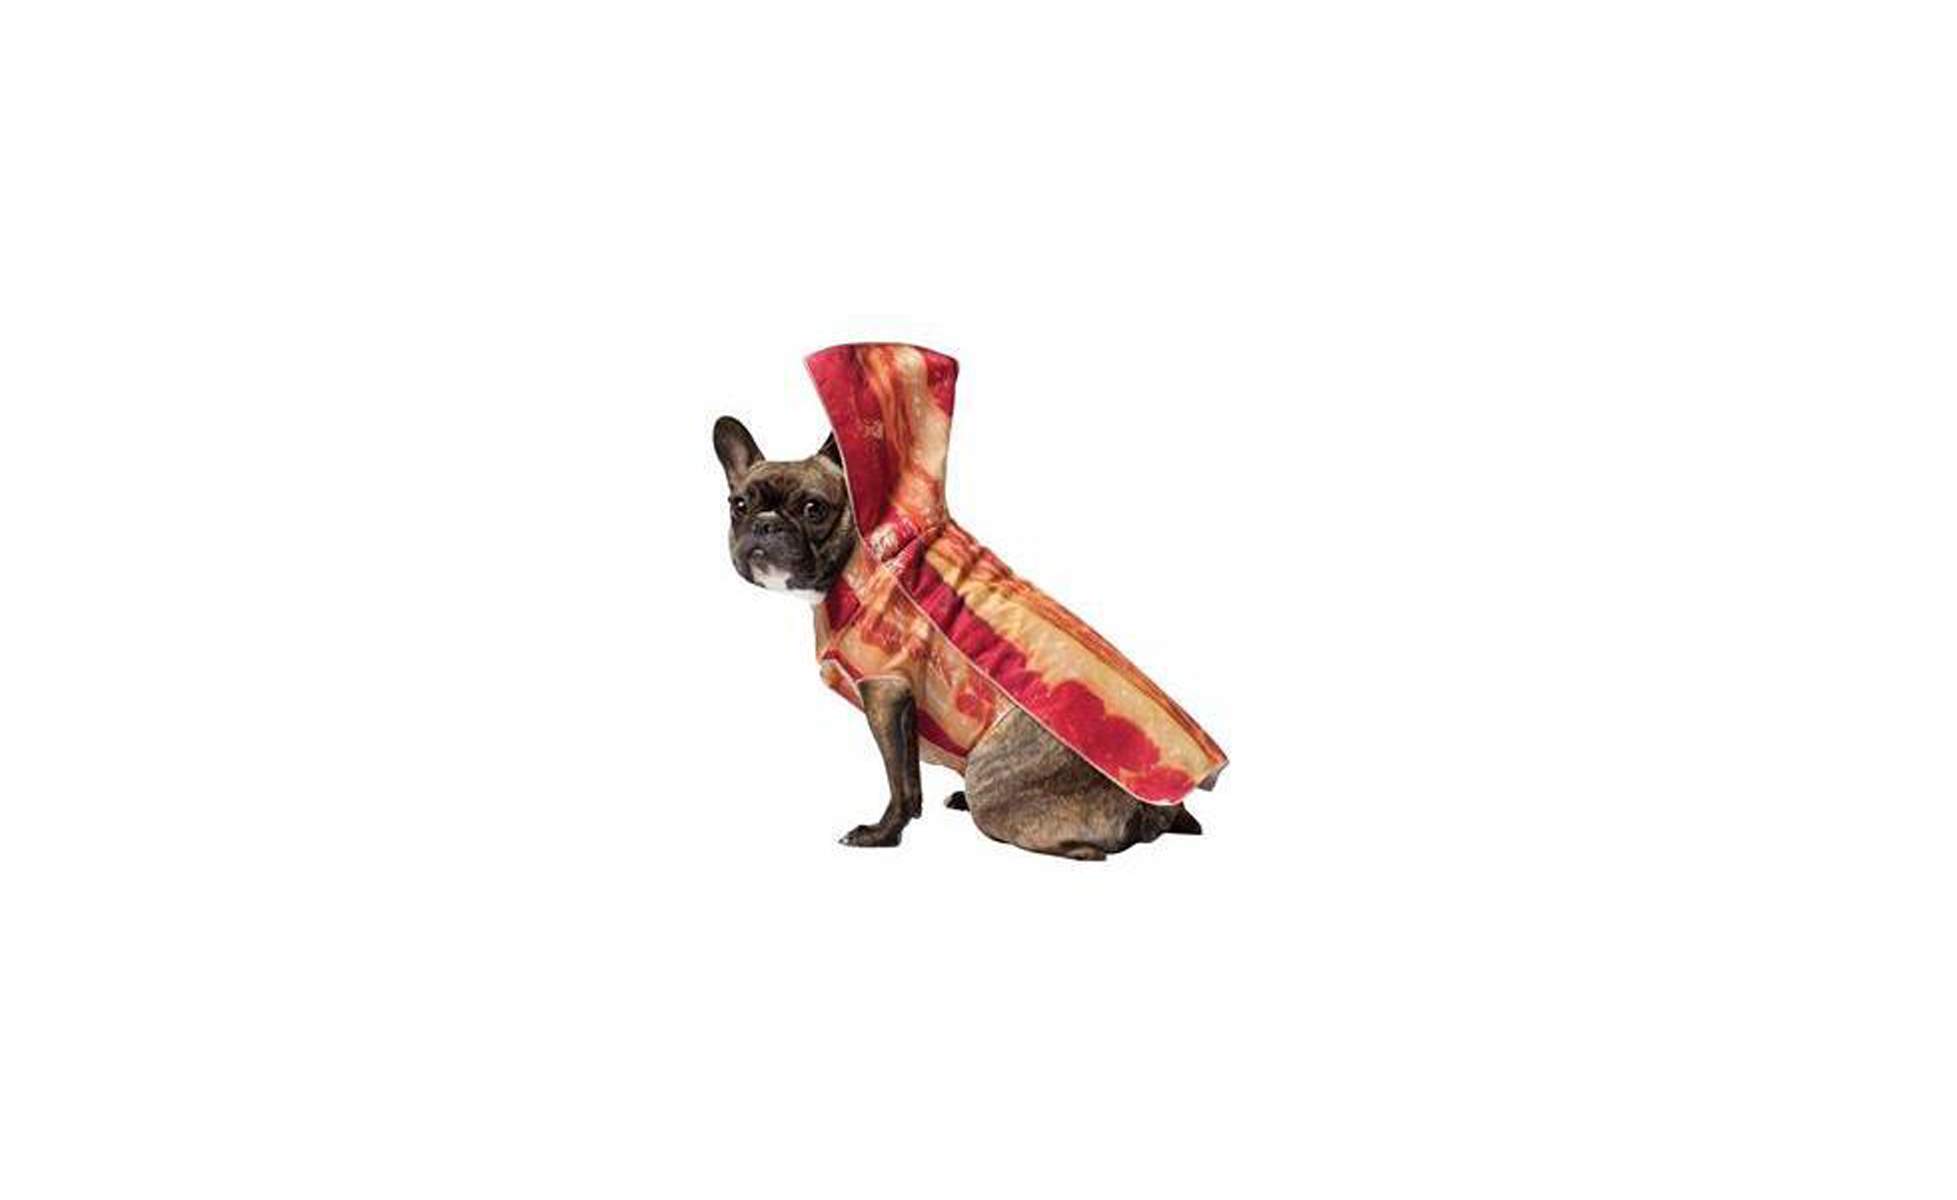   Bacon Dog Costume at Jet.com  